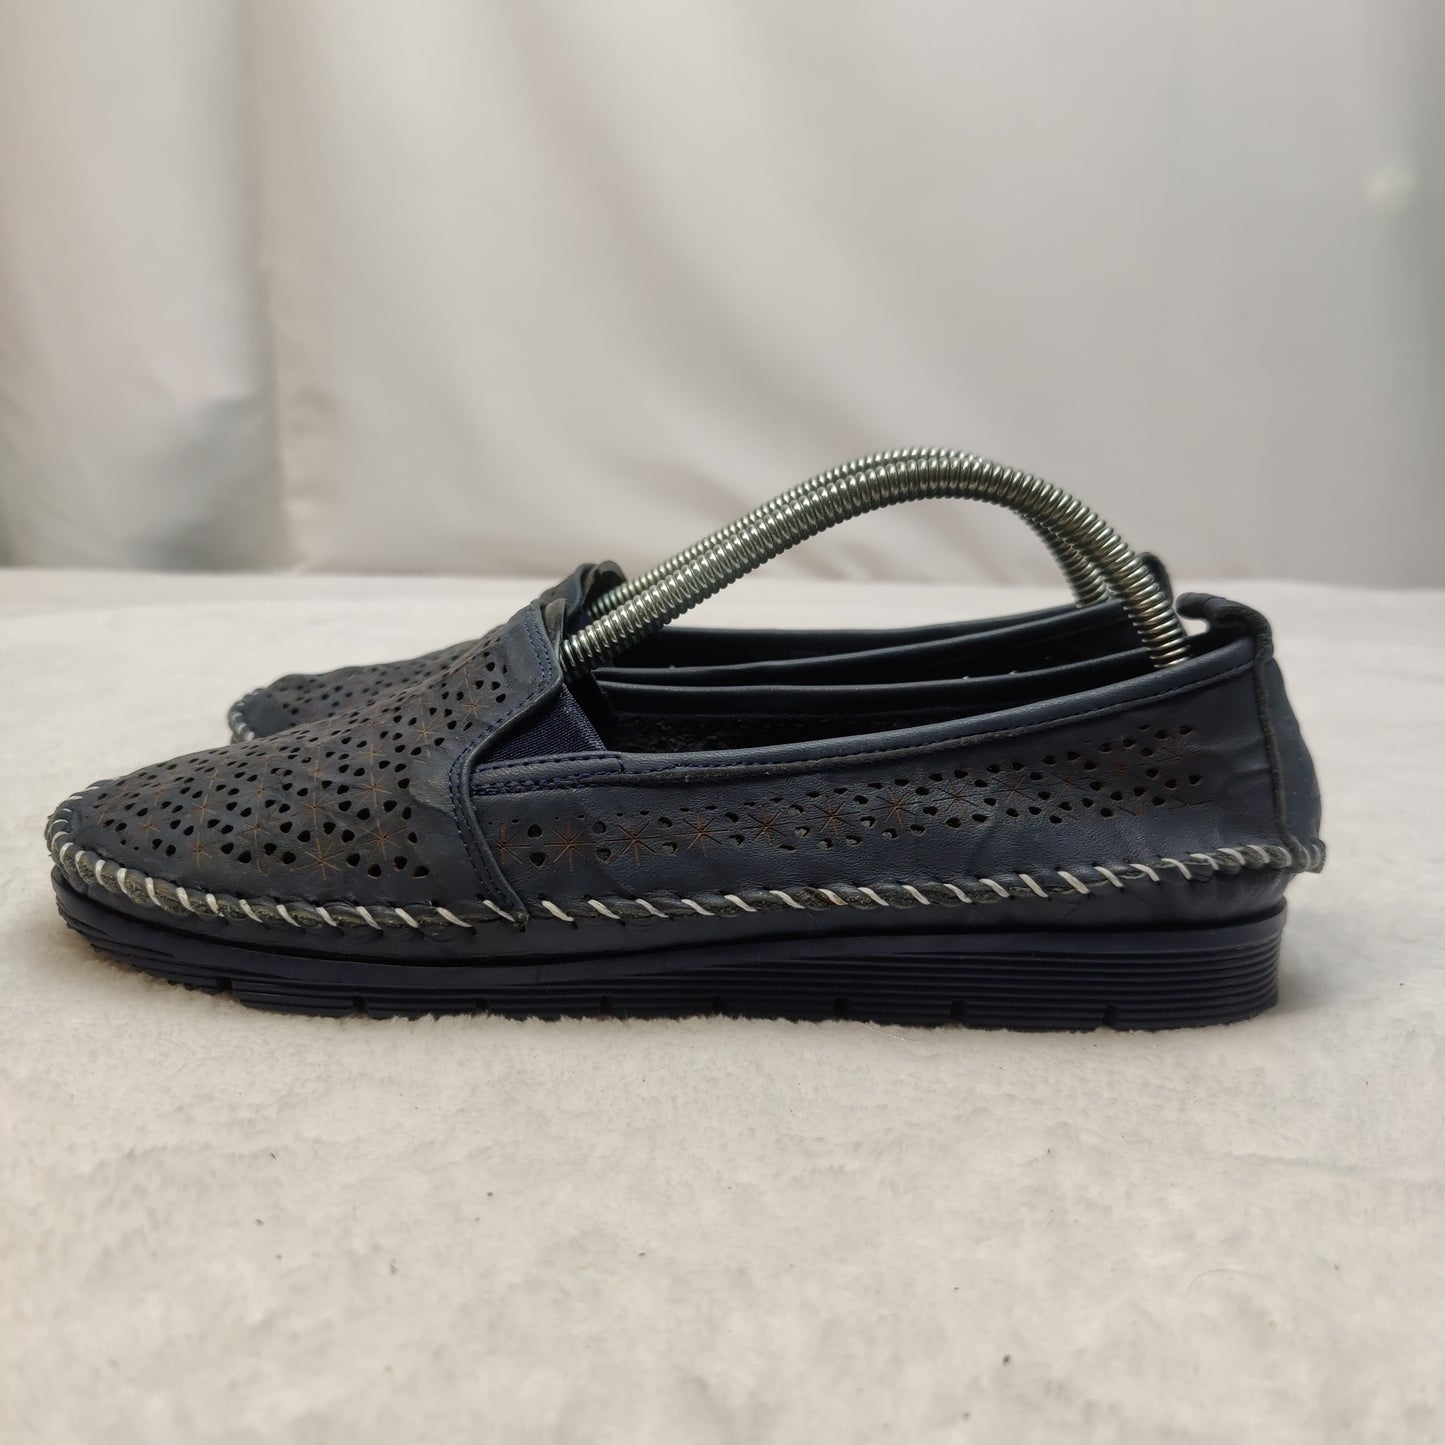 Rikel Black Flat Slip On Loafer Shoes Women Size UK 7.5 EU 41